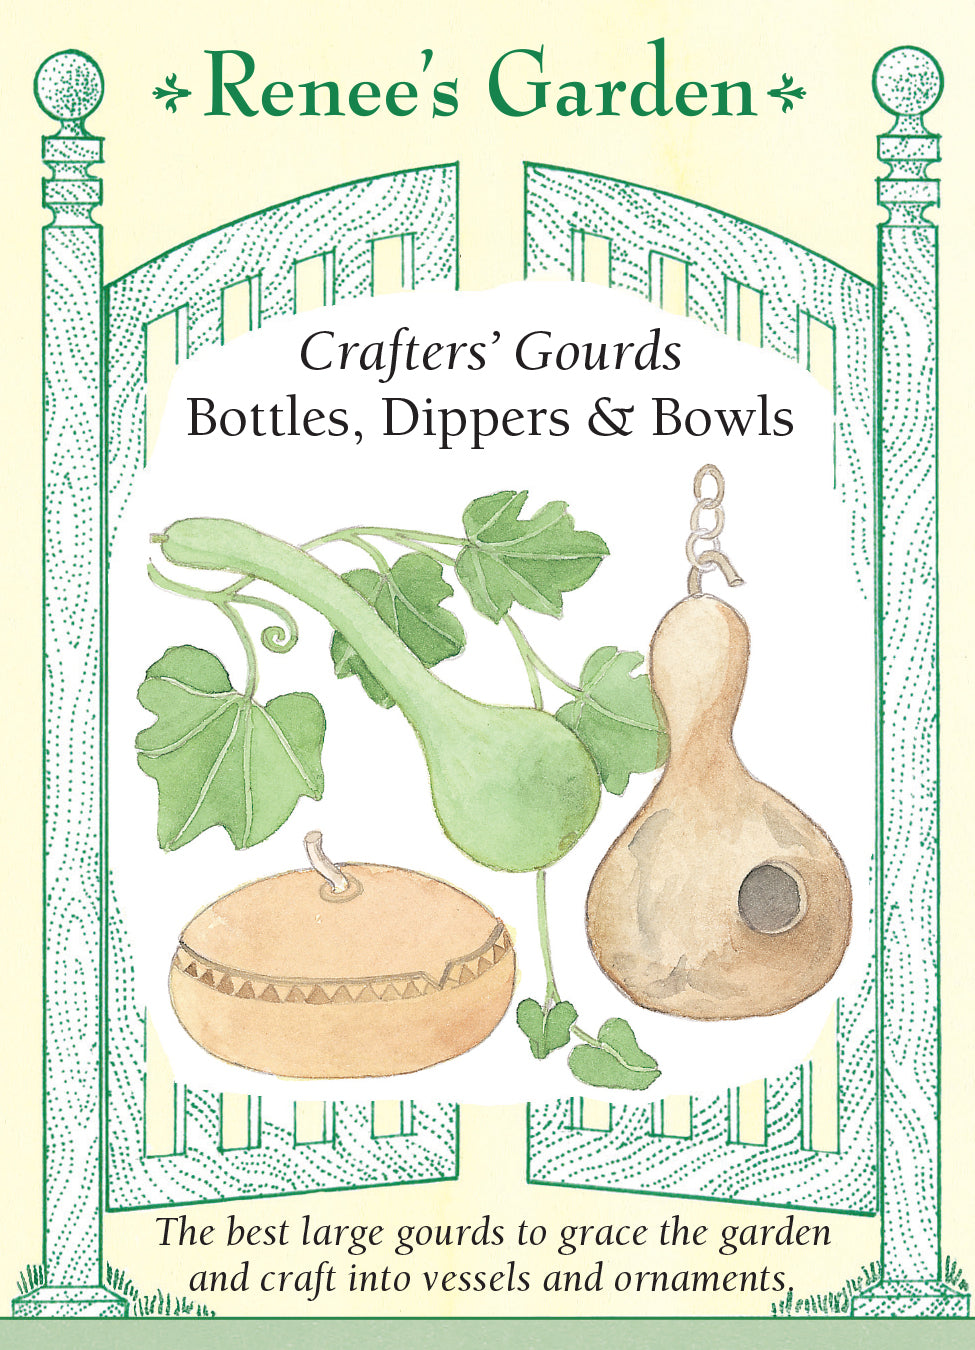 Gourds - Crafter's Bottles & Bowls